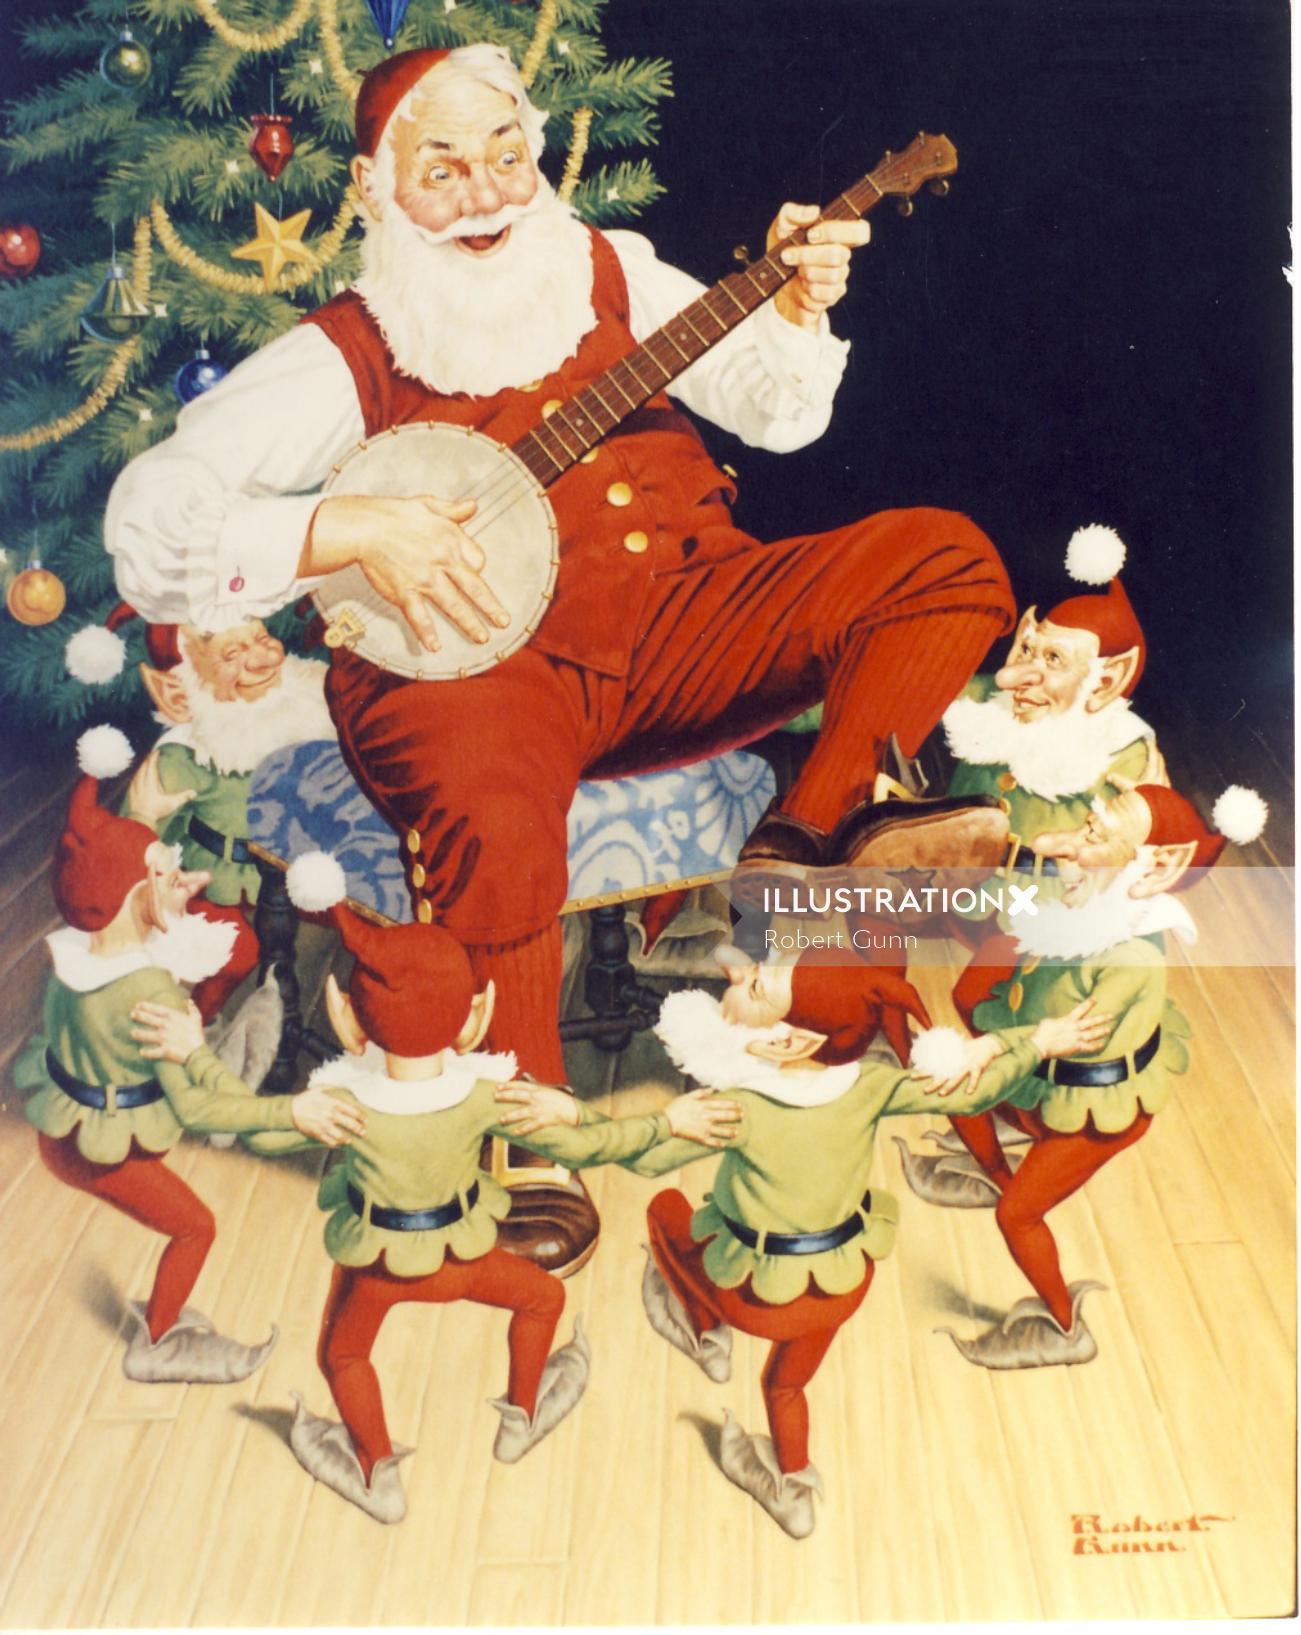 Illustration of Elves dancing around Santa playing a banjo